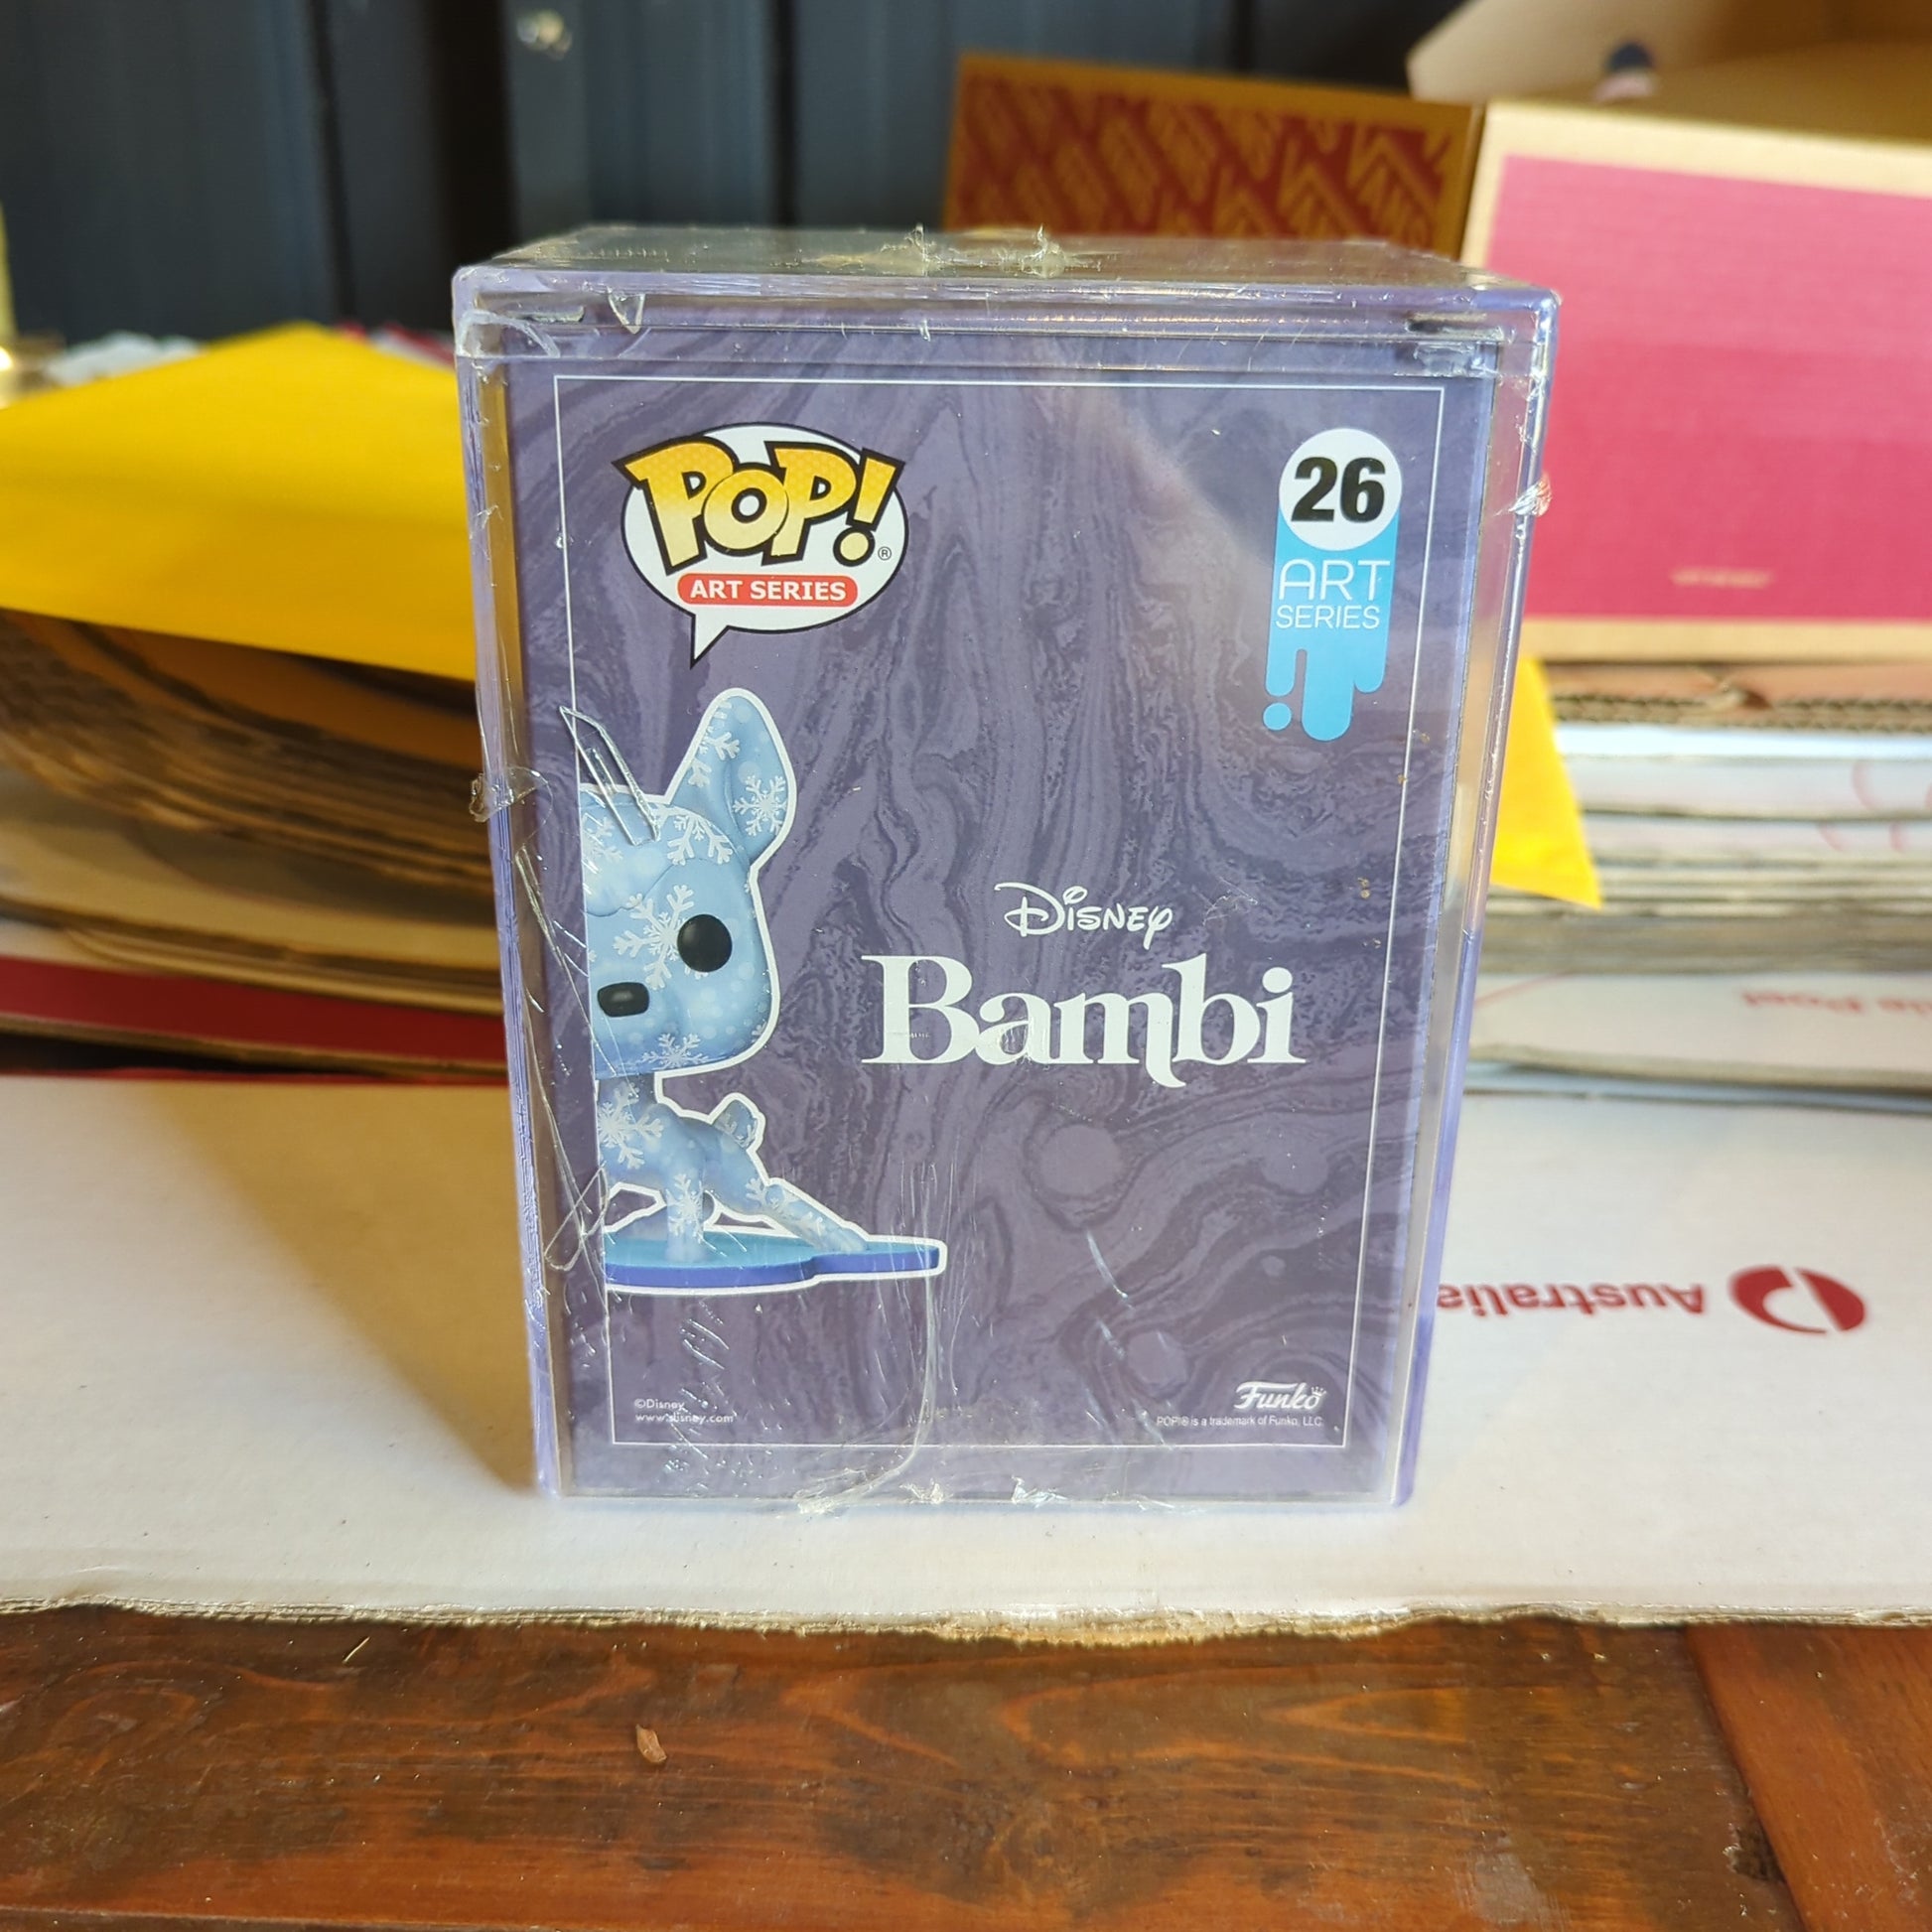 Funko Pop! Artist Series: Disney Treasures from The Vault Bambi 26 Action Figure FRENLY BRICKS - Open 7 Days